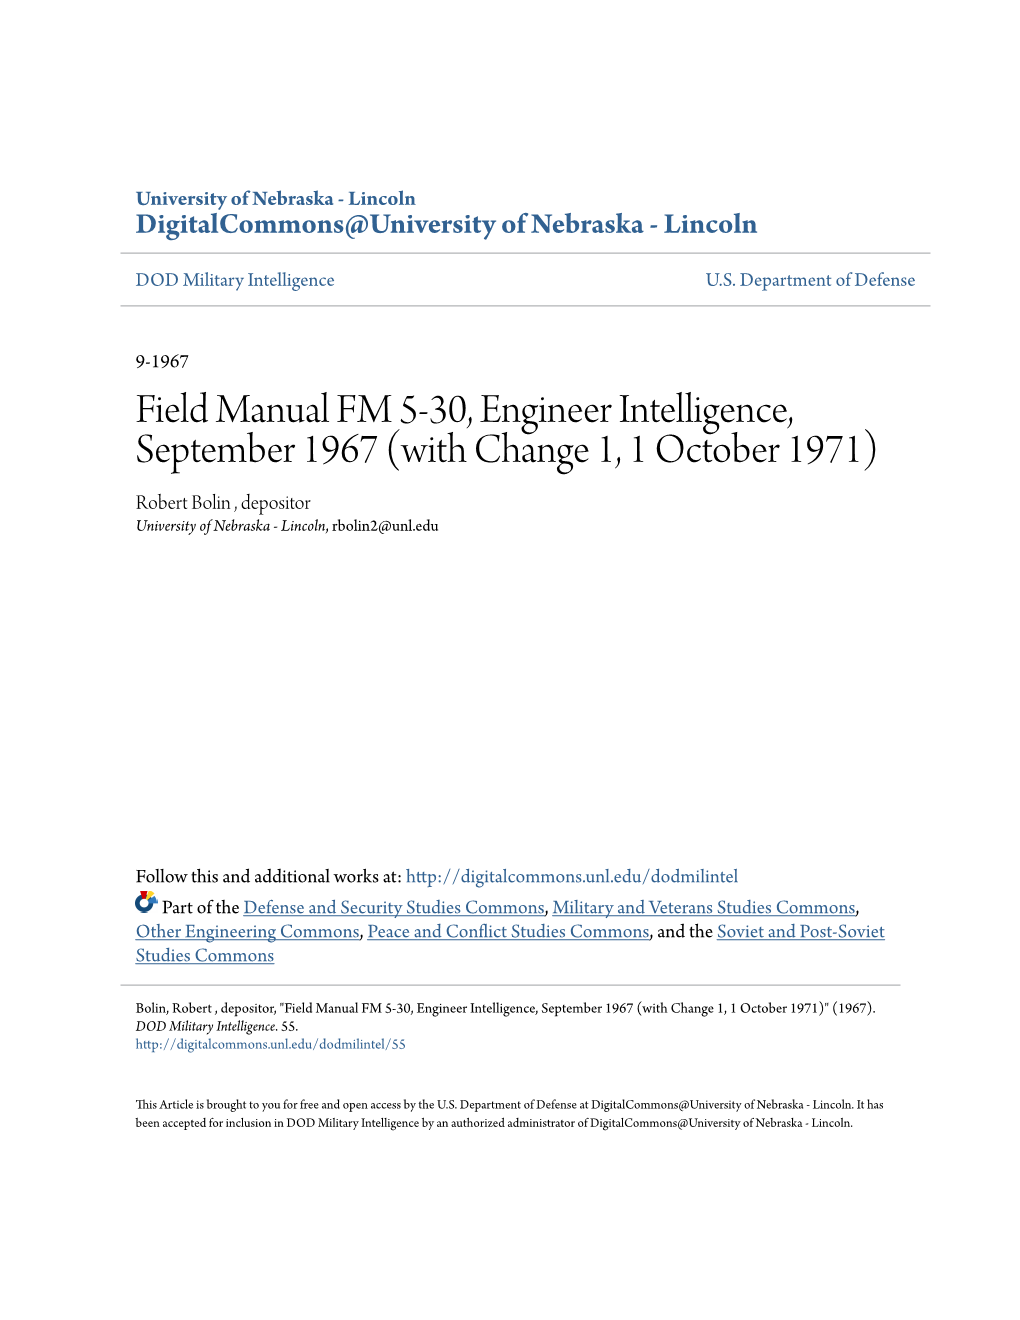 Field Manual FM 5-30, Engineer Intelligence, September 1967 (With Change 1, 1 October 1971) Robert Bolin , Depositor University of Nebraska - Lincoln, Rbolin2@Unl.Edu